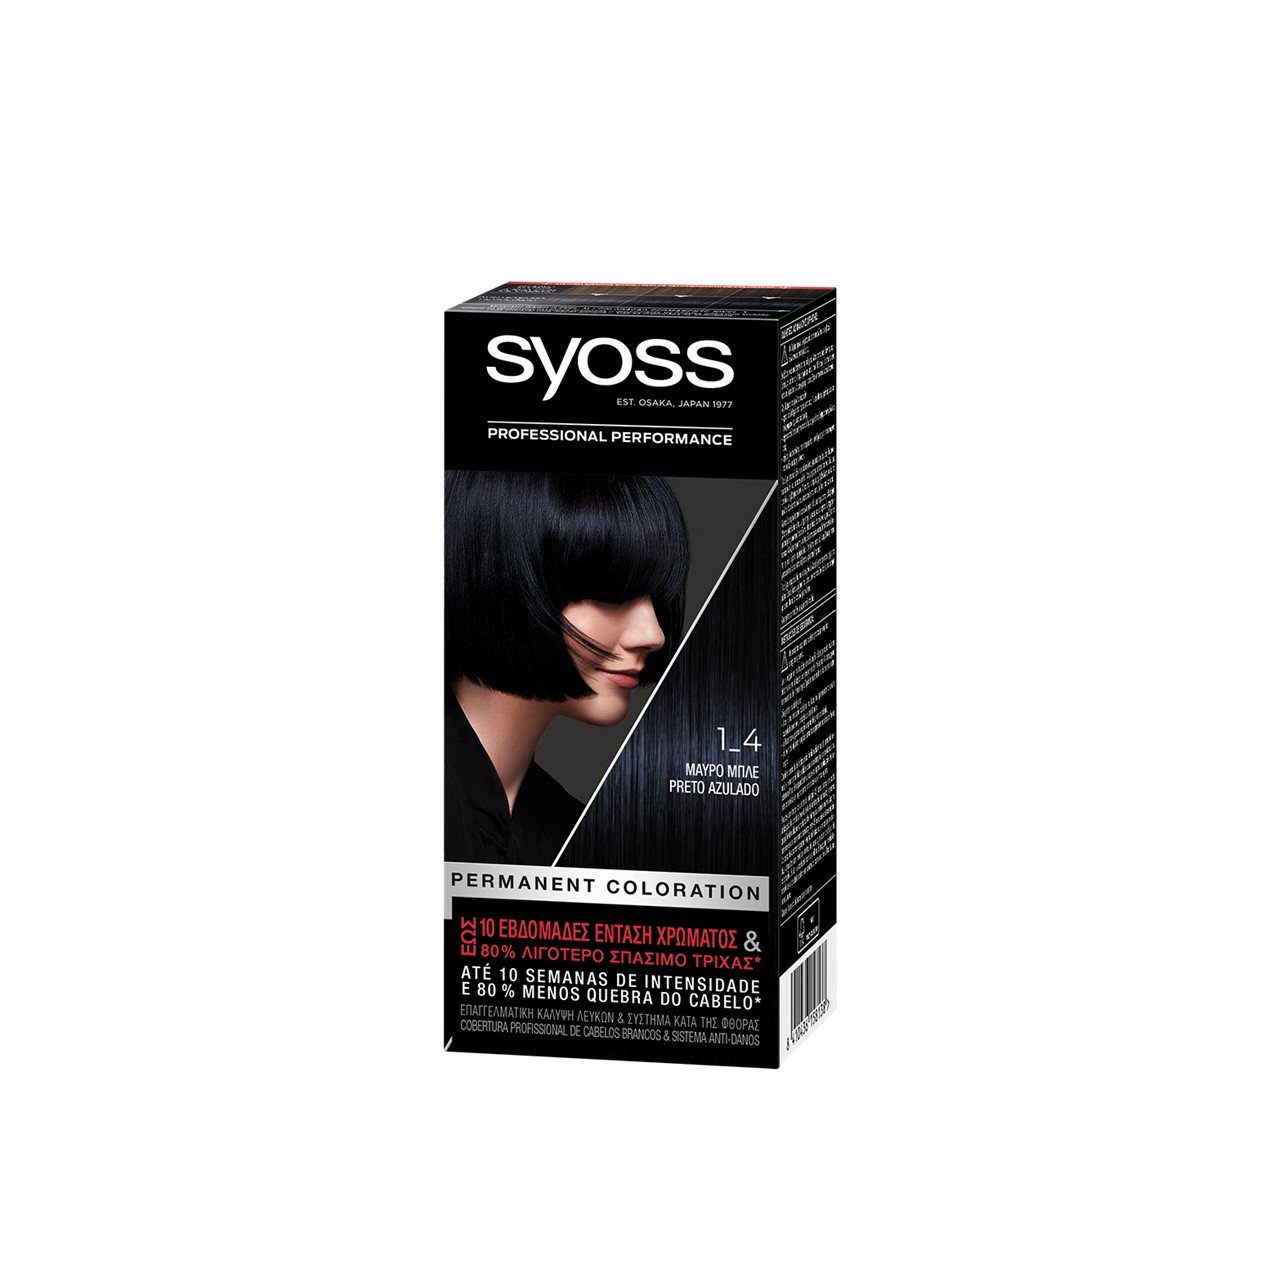 Syoss Permanent Coloration 1_4 Blue Black Permanent Hair Dye